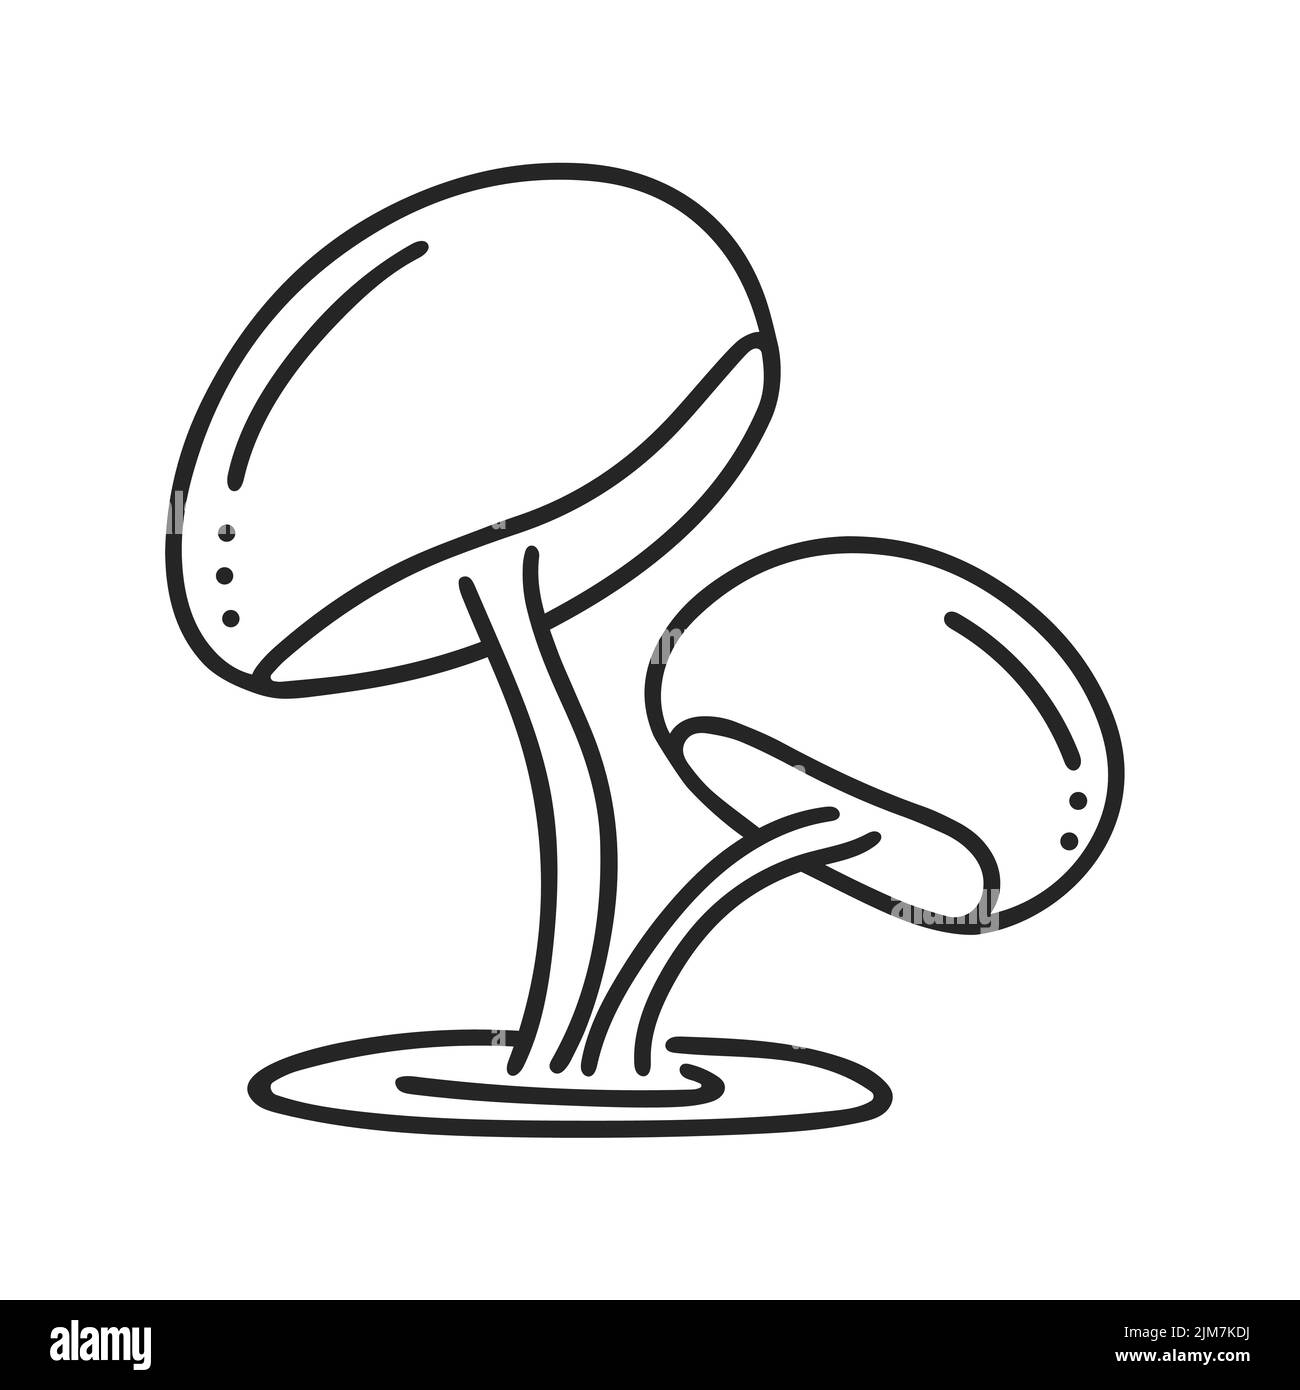 Mushrooms doodle illustration Stock Vector